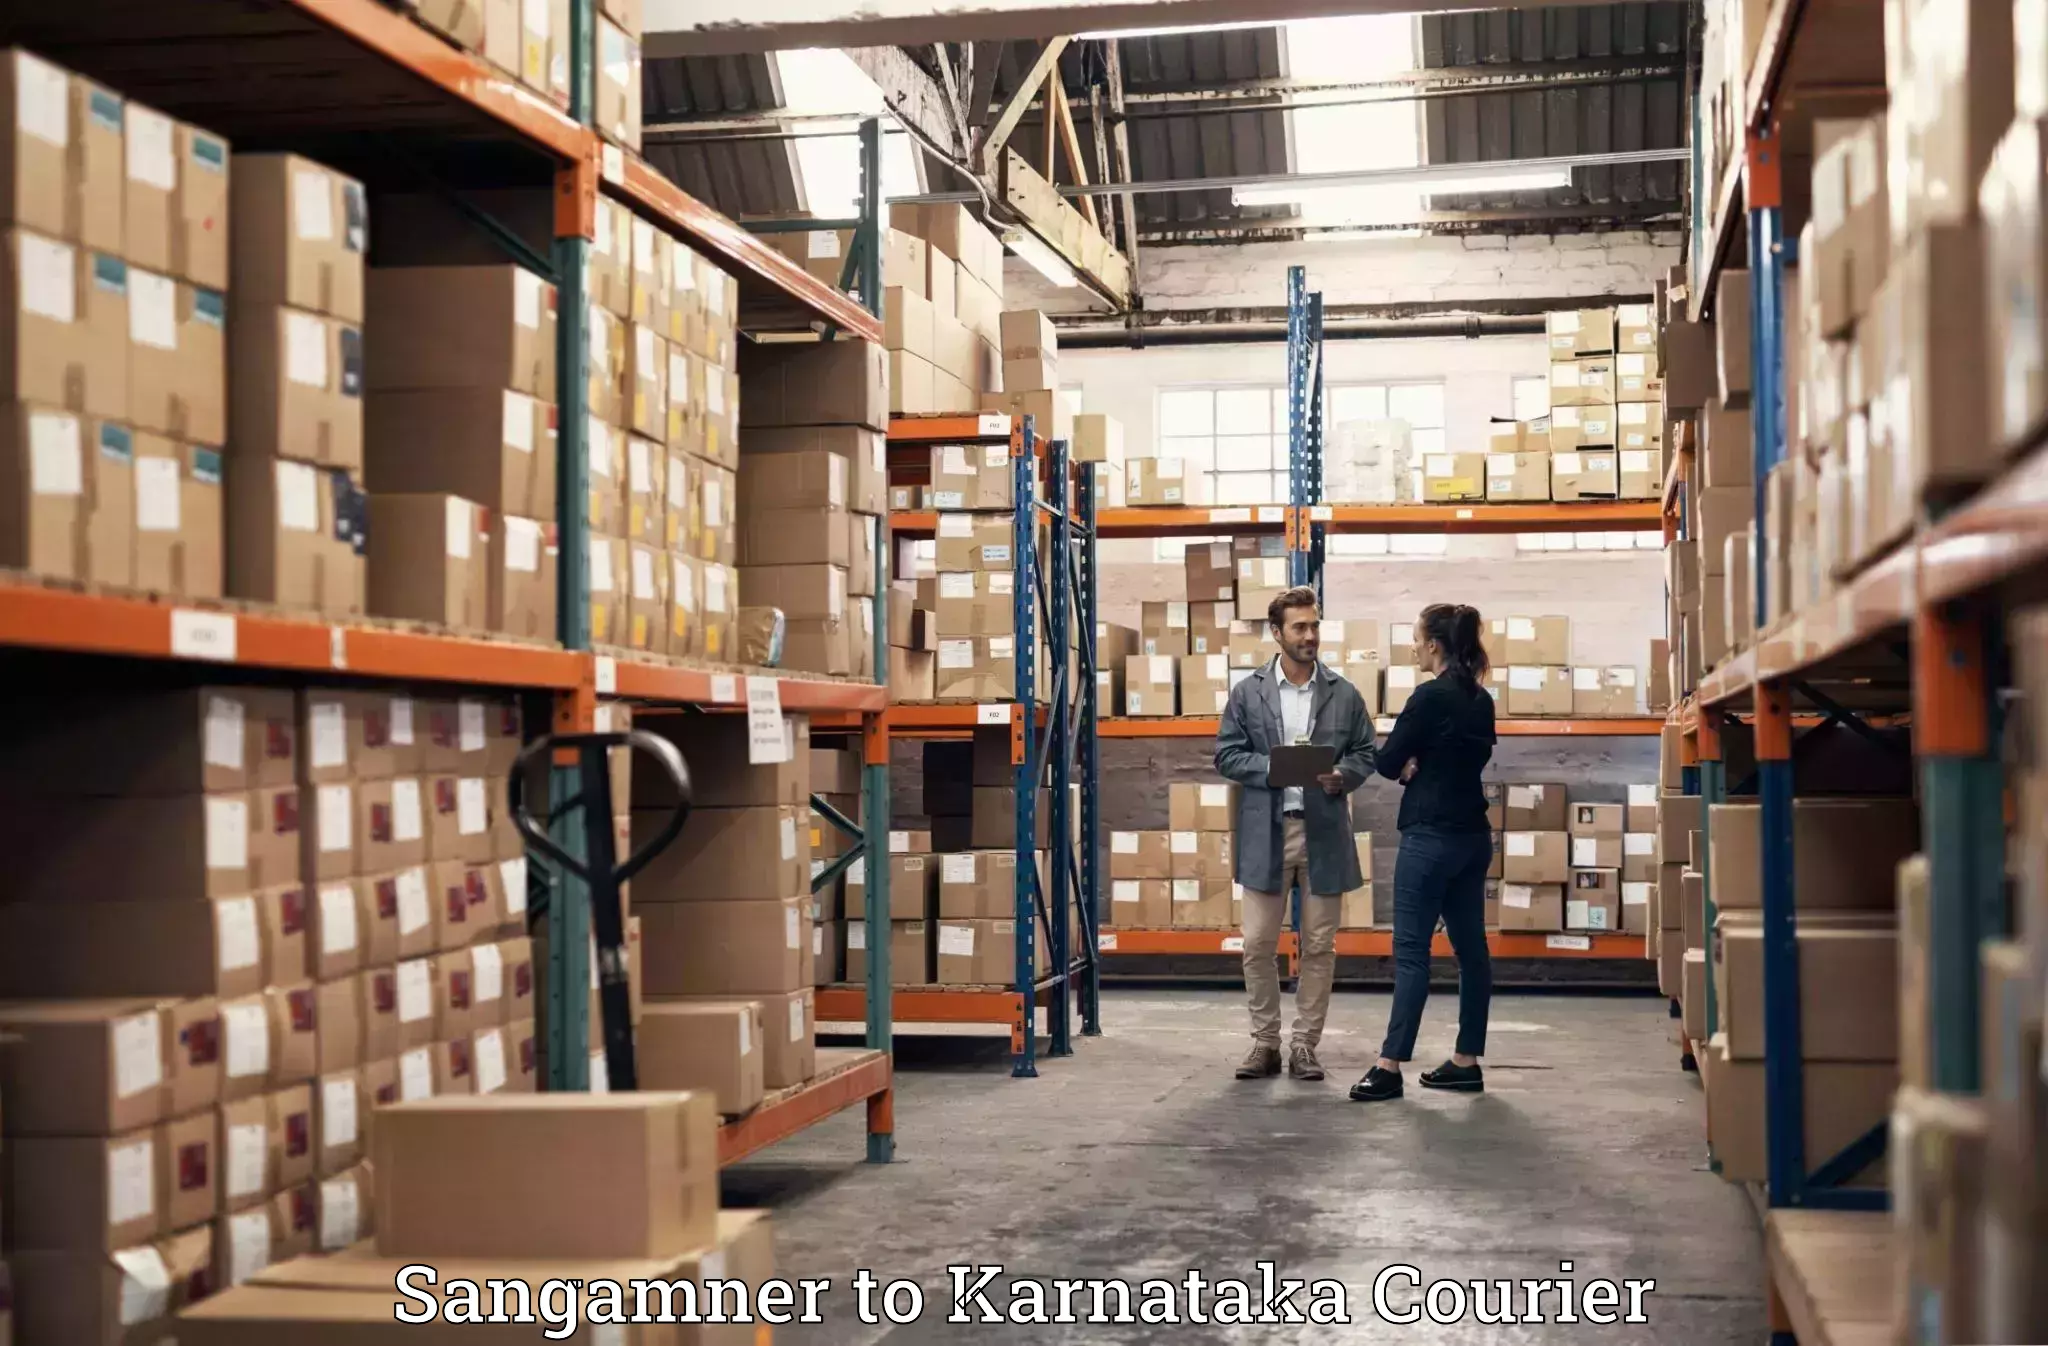 Luggage shipment specialists Sangamner to Karnataka